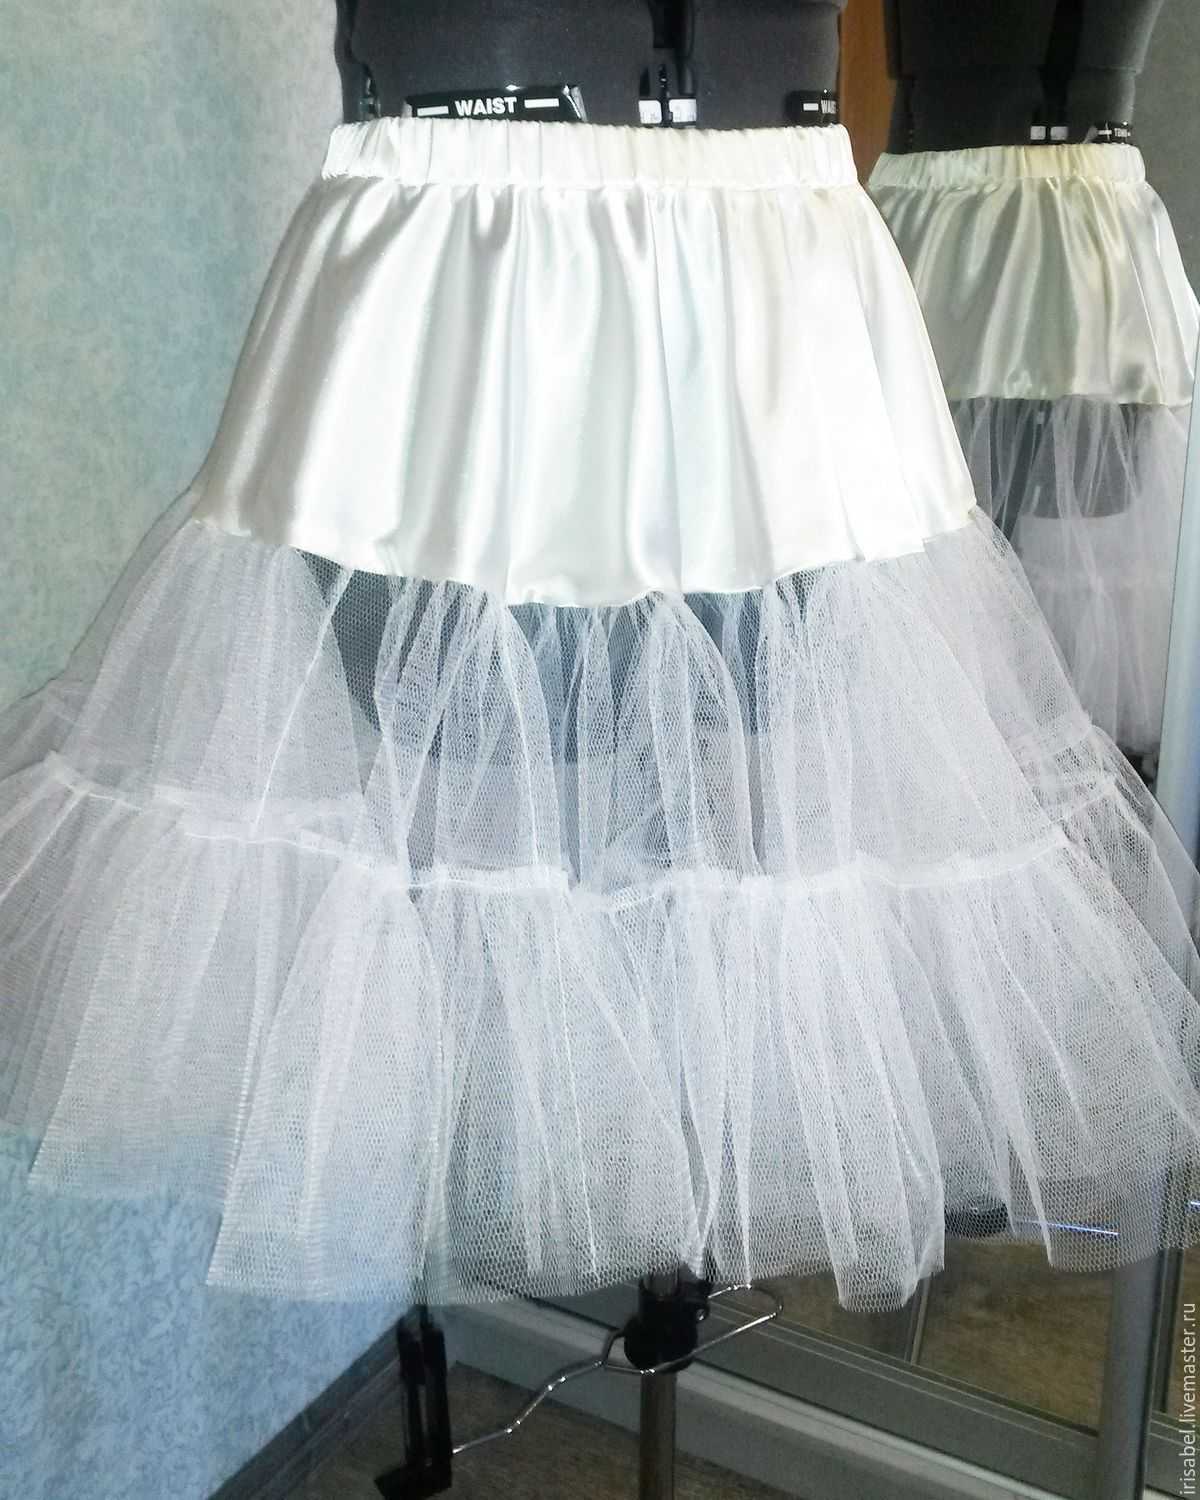 ᐉ юбка для свадебного стола из фатина своими руками - ➡ danilov-studio.ru